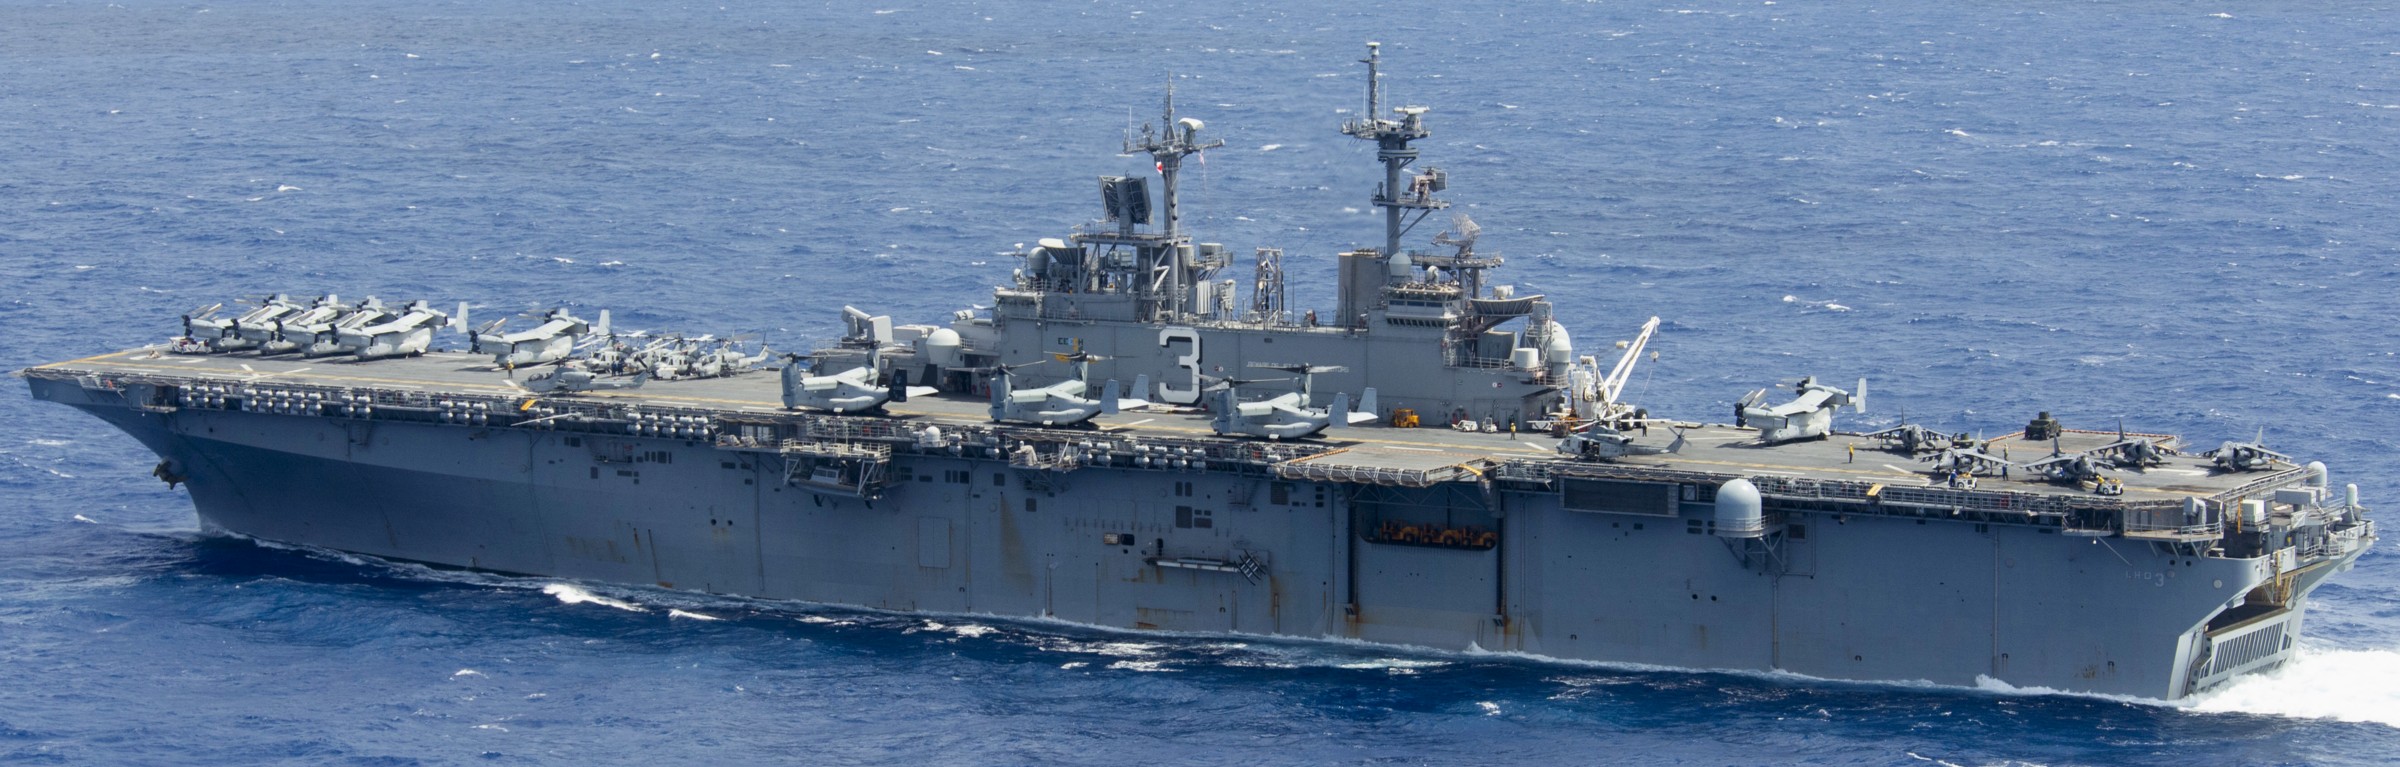 lhd-3 uss kearsarge wasp class amphibious assault ship us navy marines vmm-162 atlantic ocean 147